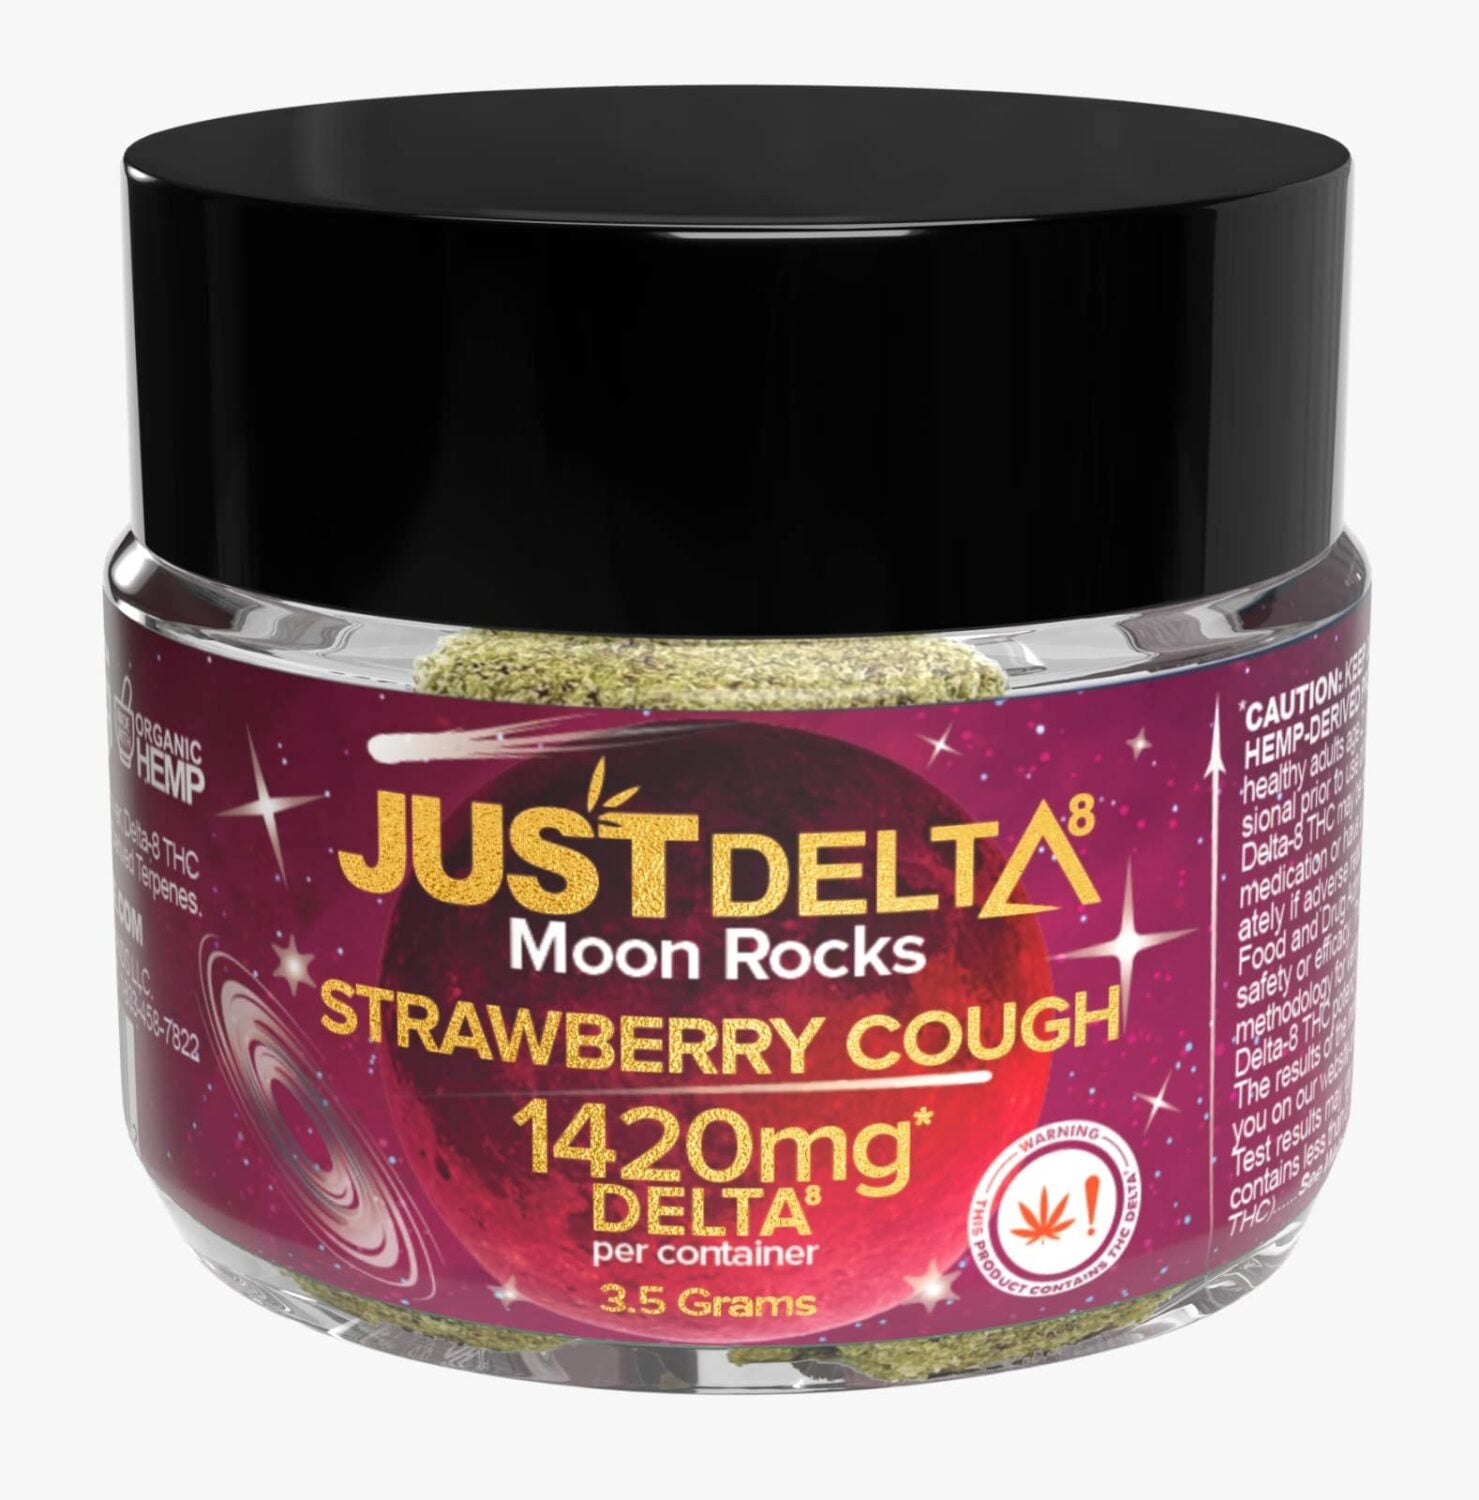 Just Delta - Delta 8 Moon Rocks Flower Just Delta Strawberry Cough  